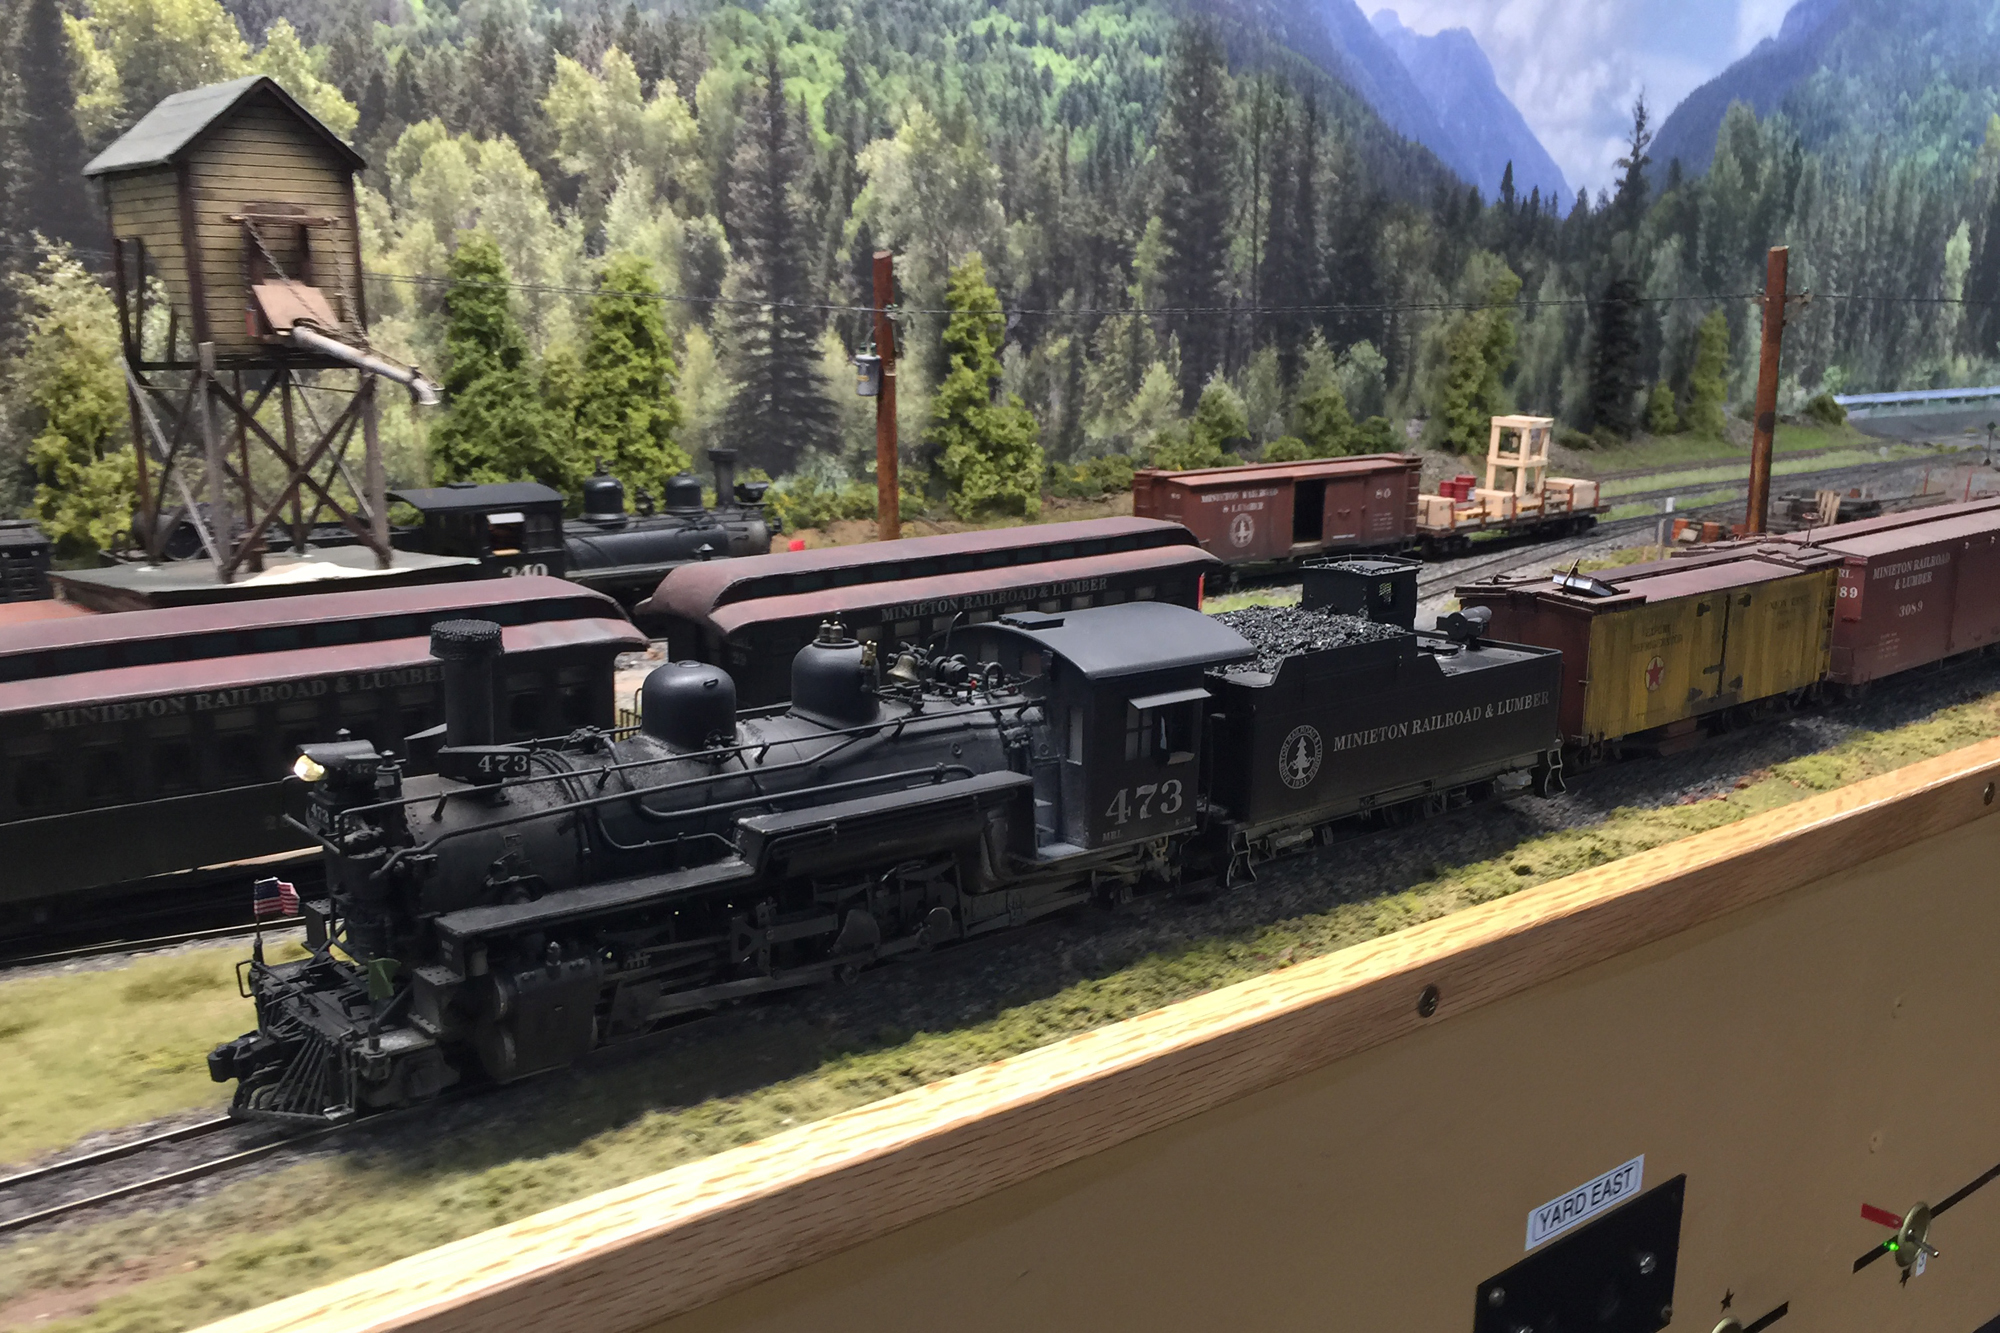 Wayne Pierce's Minieton Railroad & Lumber Co. On30 layout.